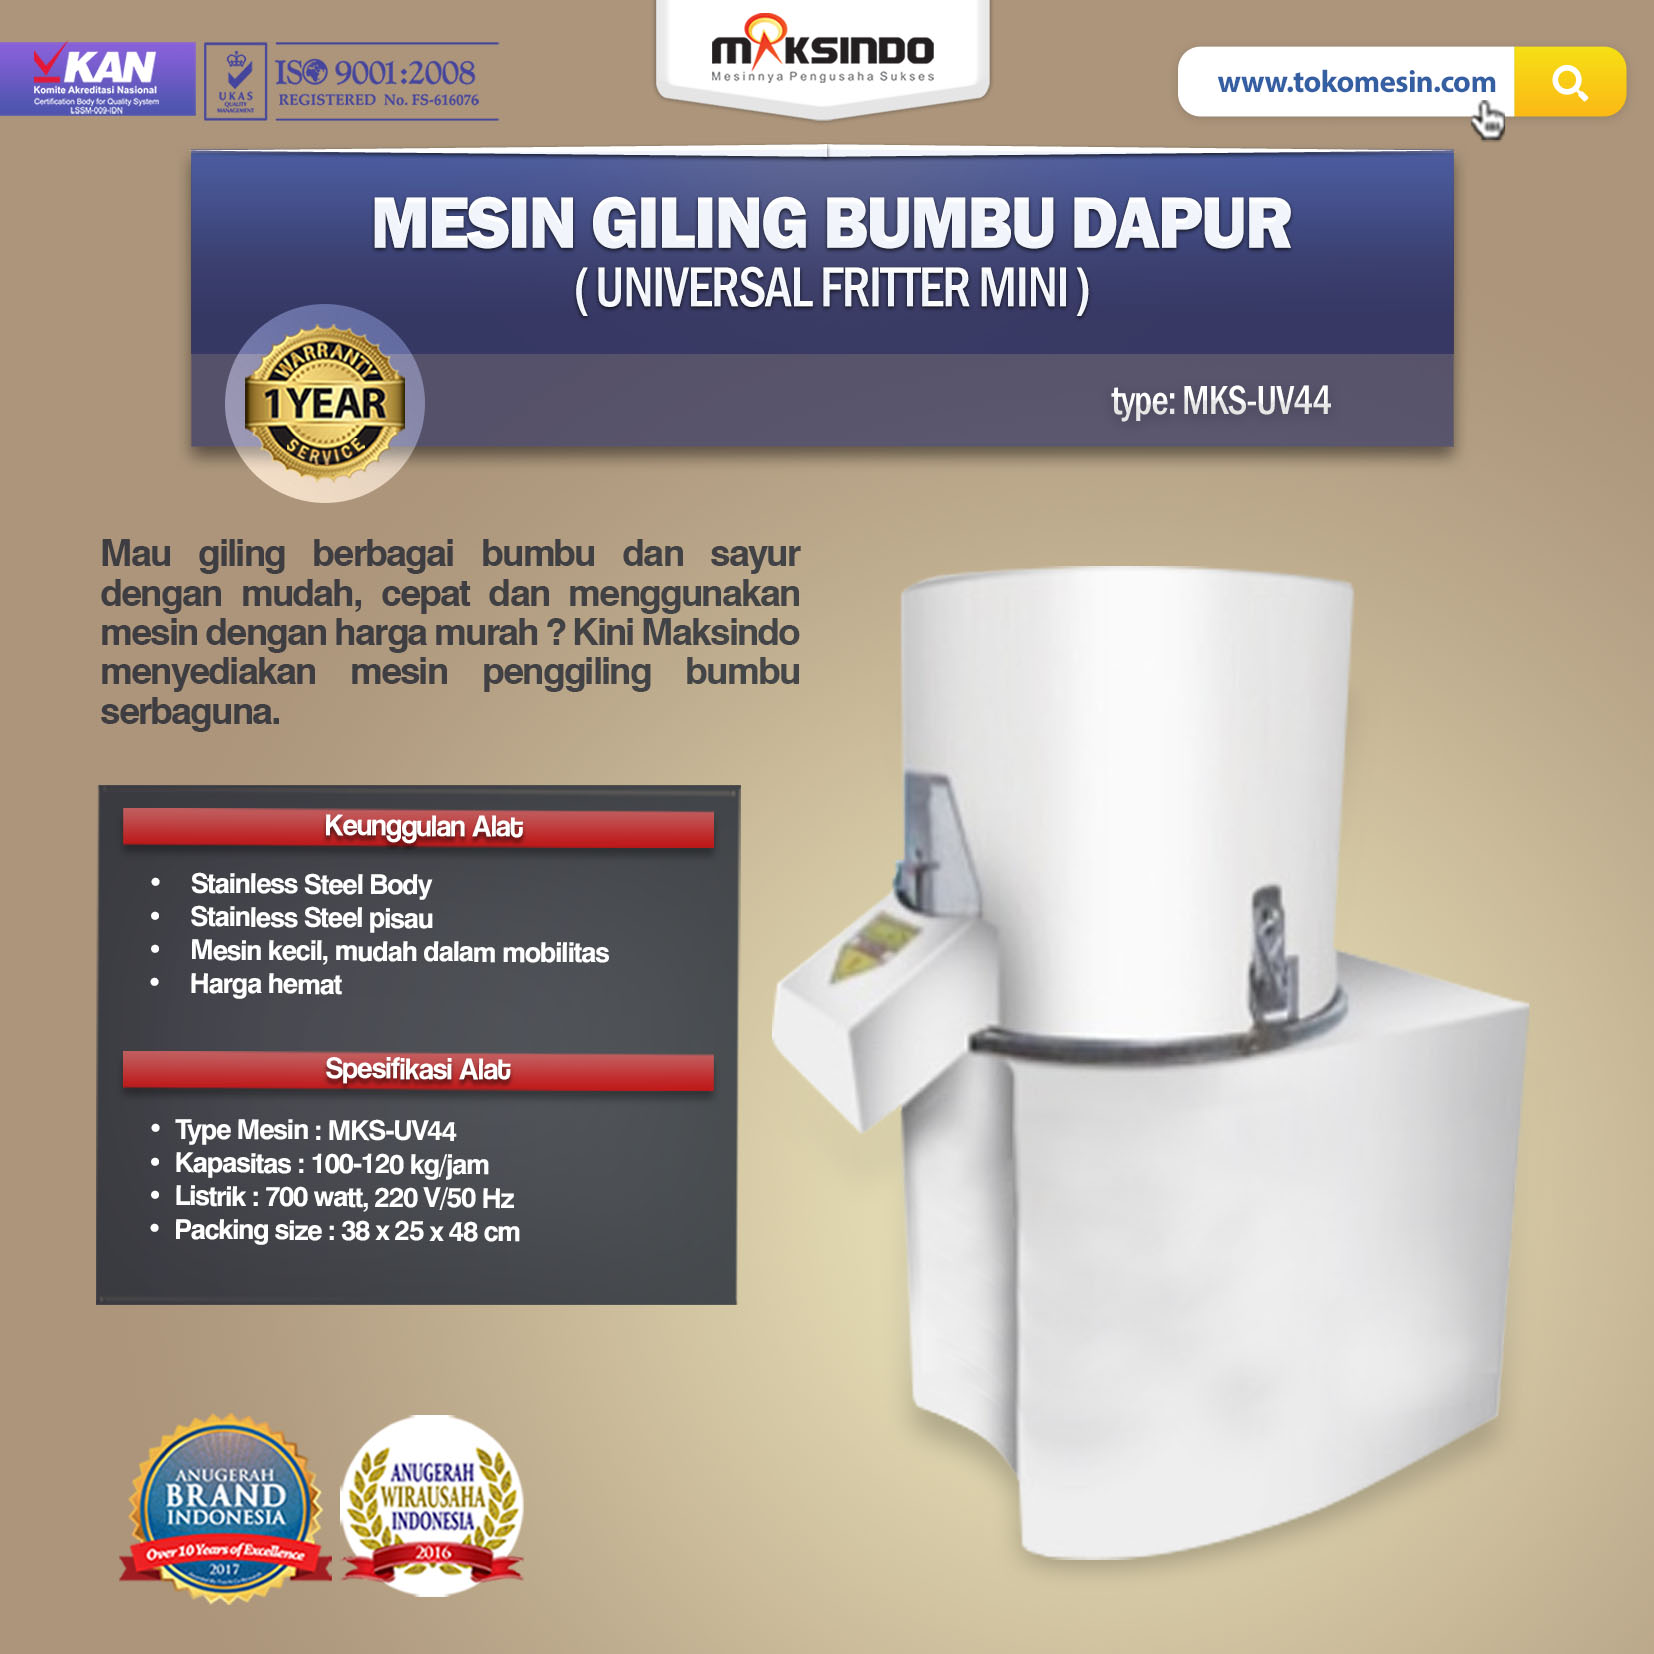 Jual Mesin Giling Bumbu Dapur (Universal Fritter Mini) MKS-UV44 di Semarang